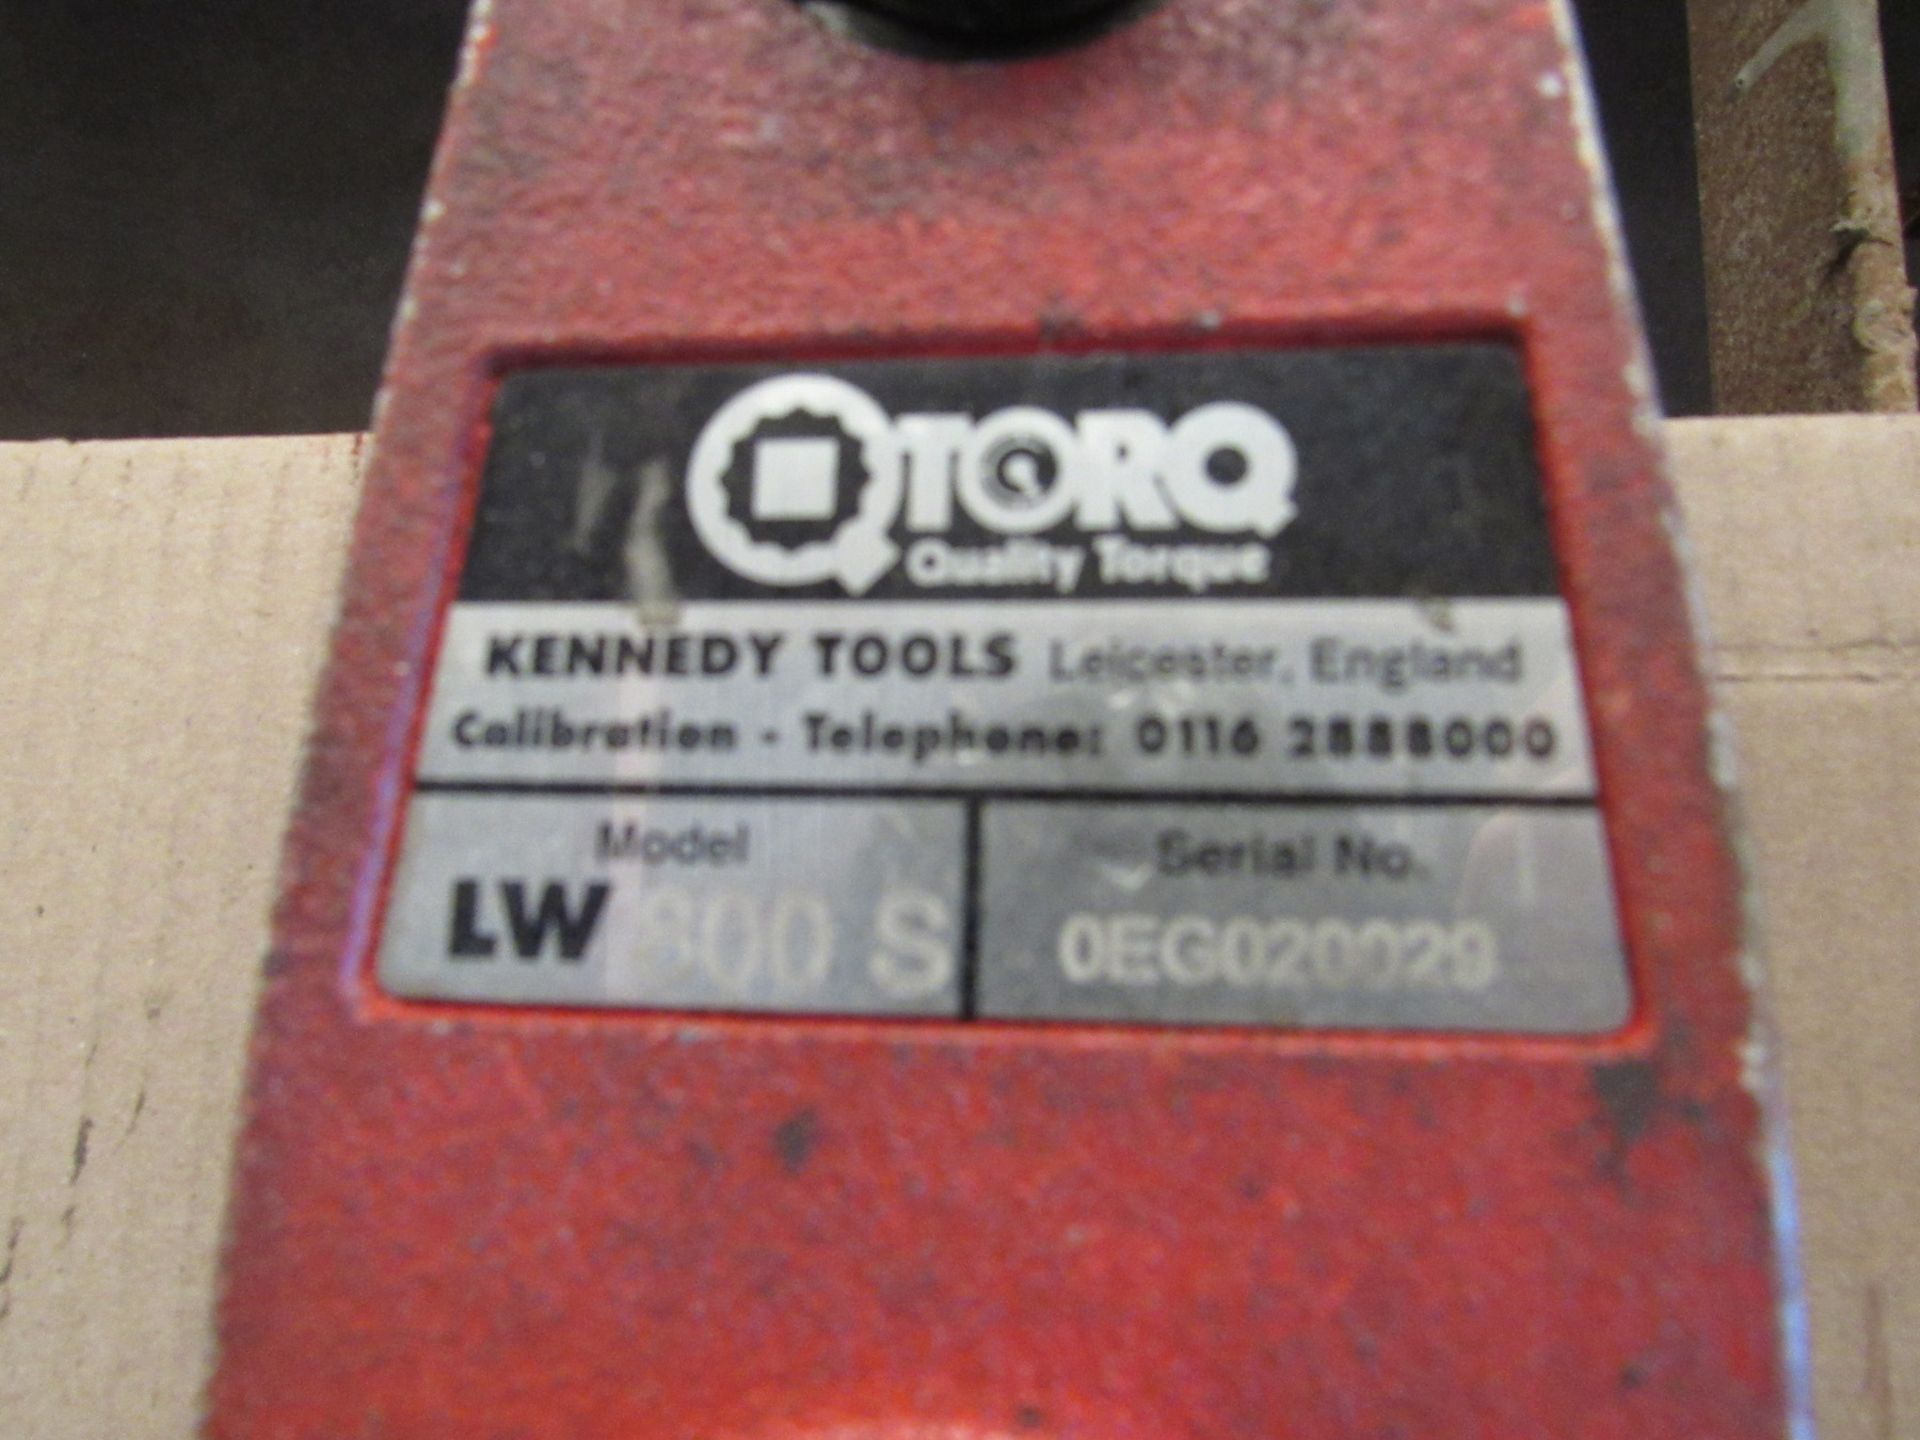 Toro LW 800S Heavy Duty Torque Wrench - Image 3 of 3